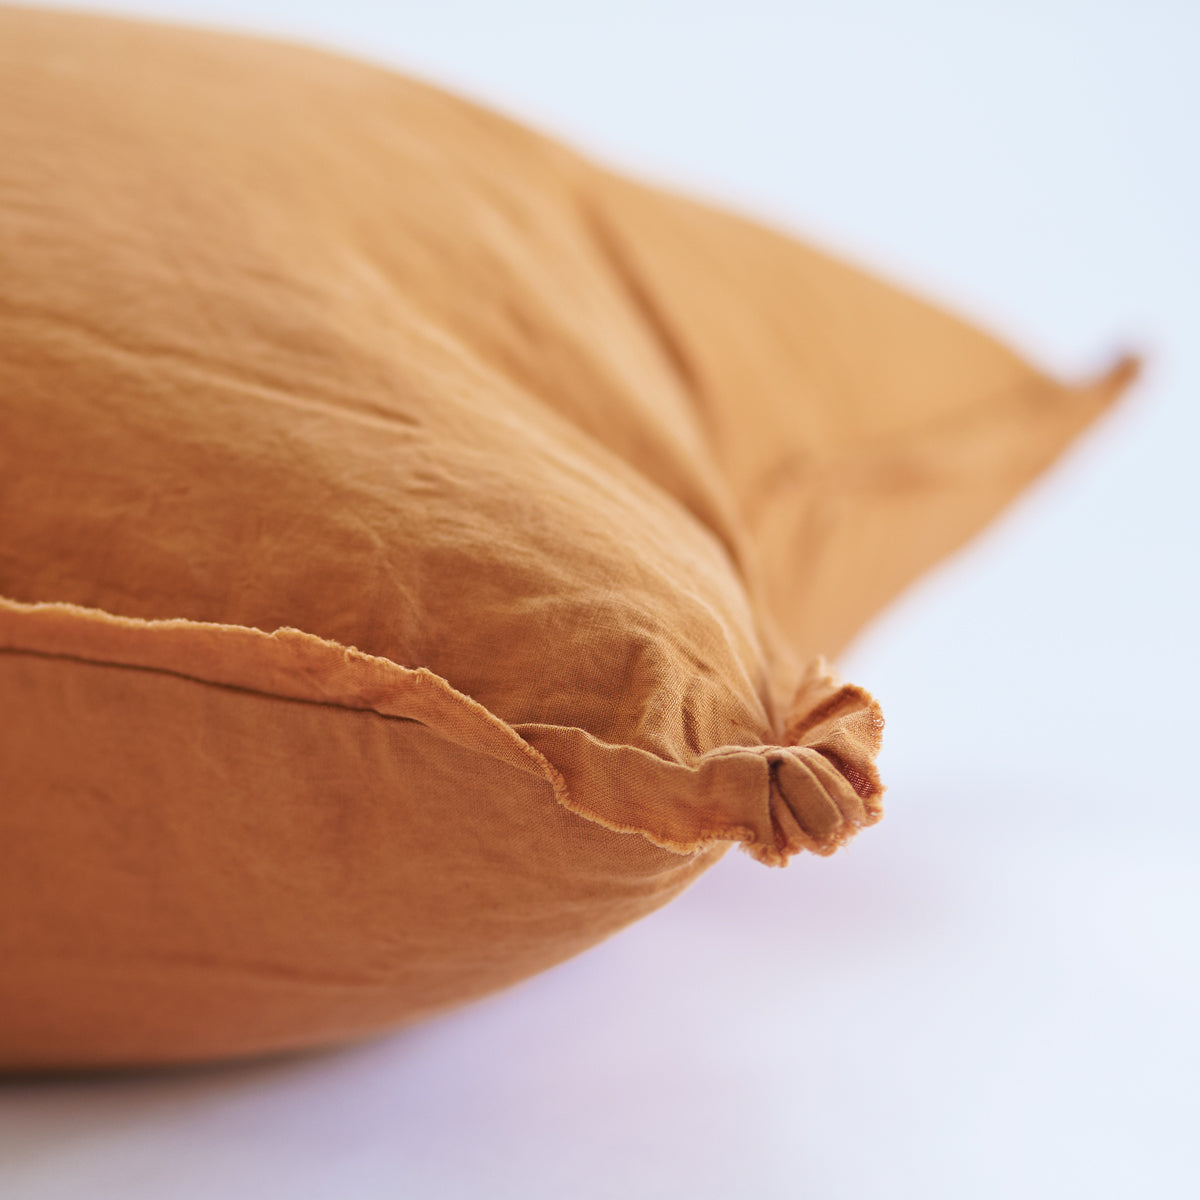 Linen Bedhead Cushion in Clay